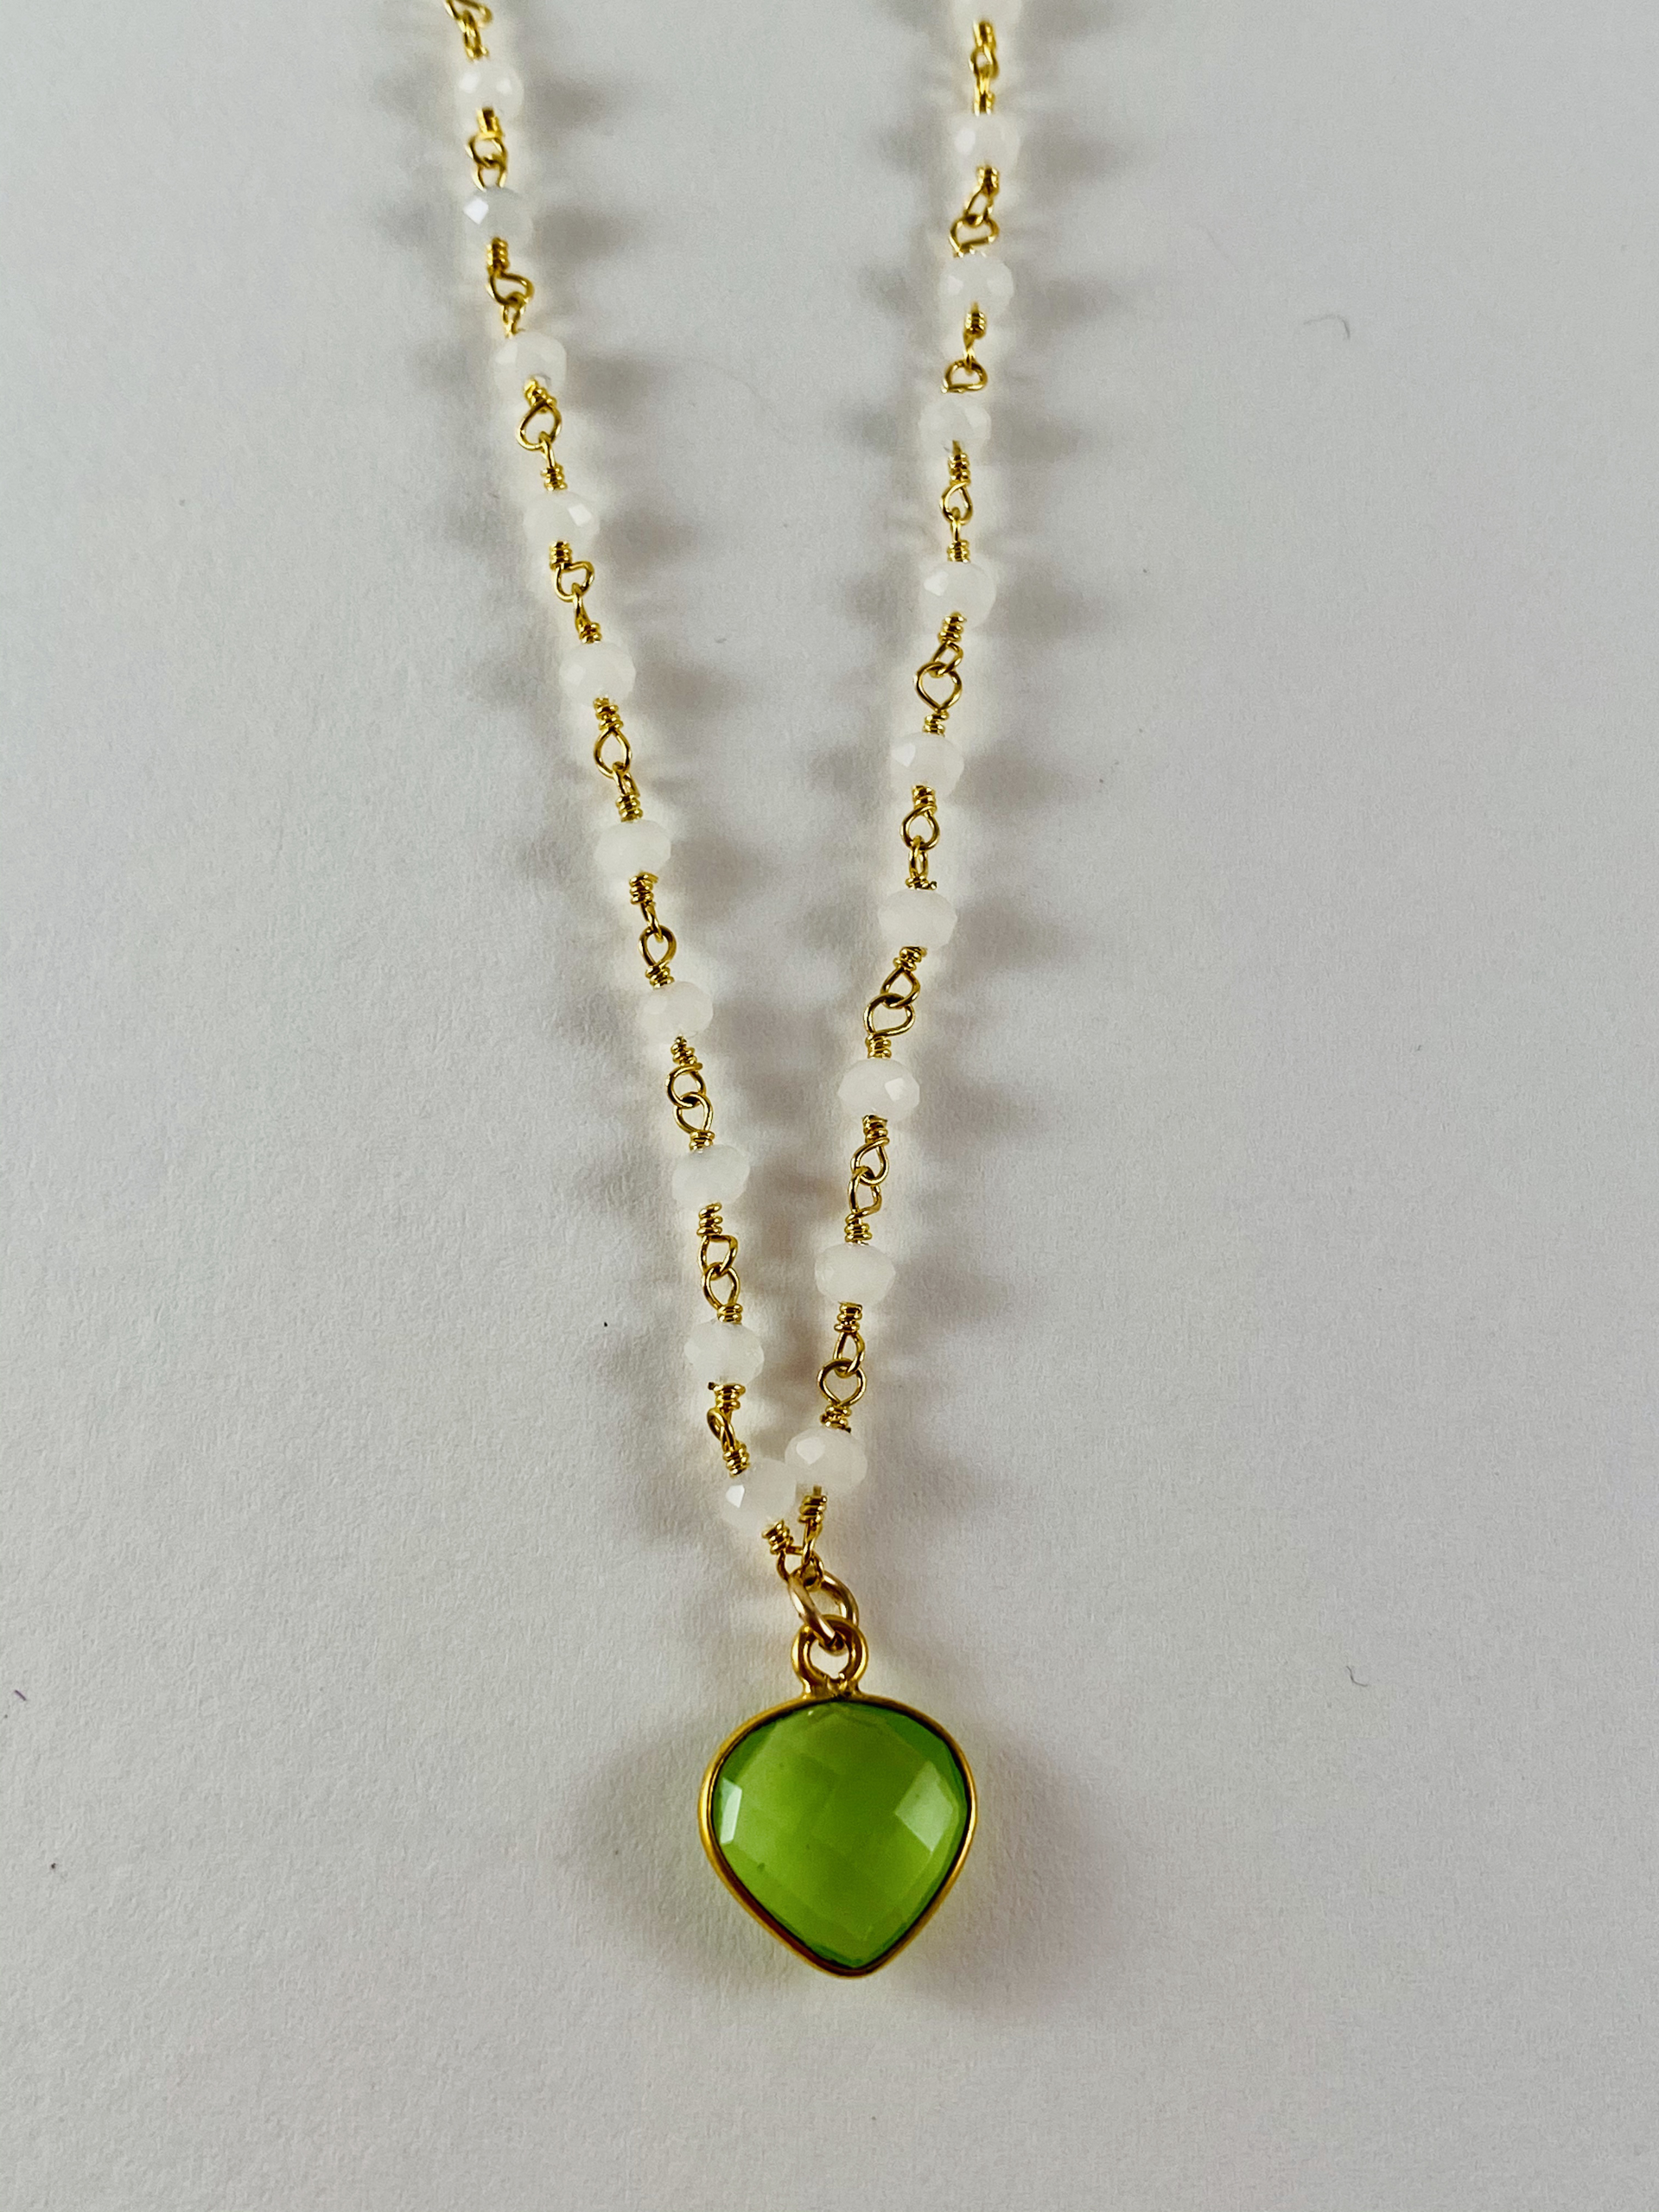 White Jade Necklace, green chalcedony pendant by Nance Trueworthy